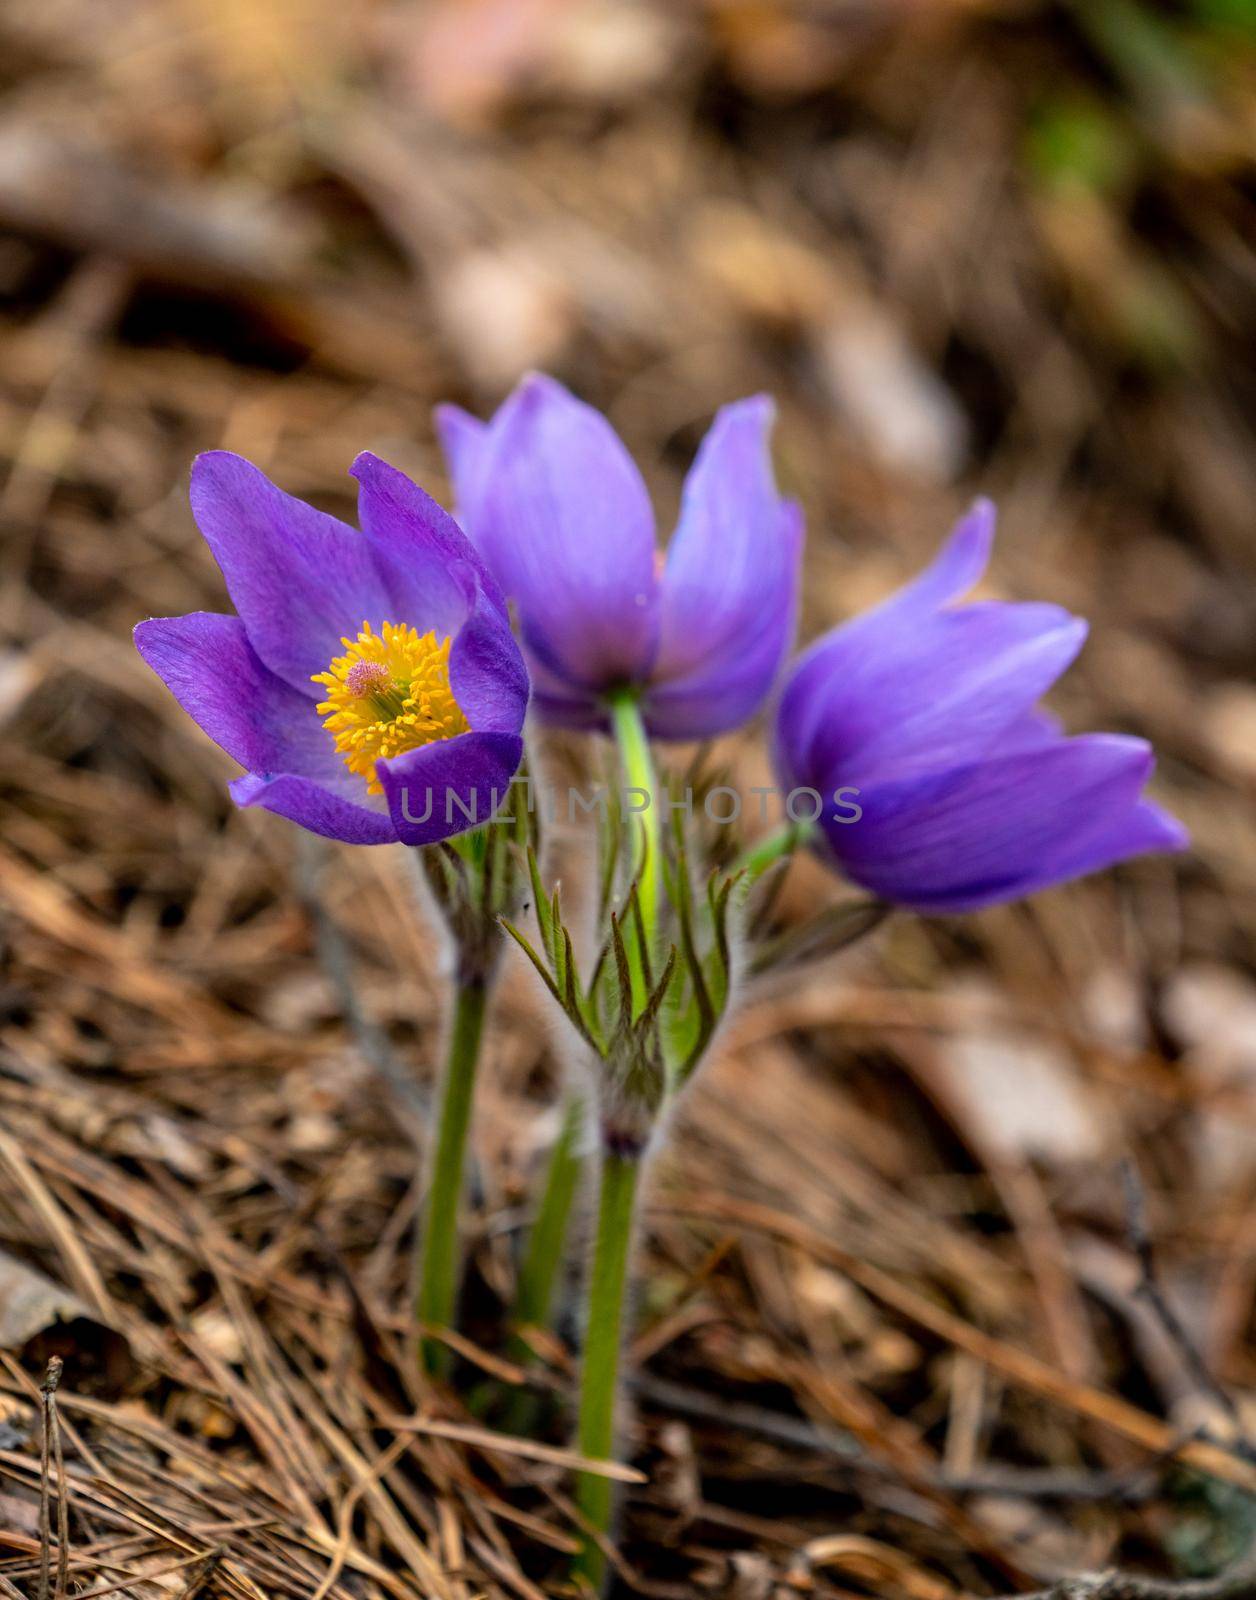 Pulsatilla patens or Eastern pasqueflower and cutleaf anemone close-up. Spring seasonal flower